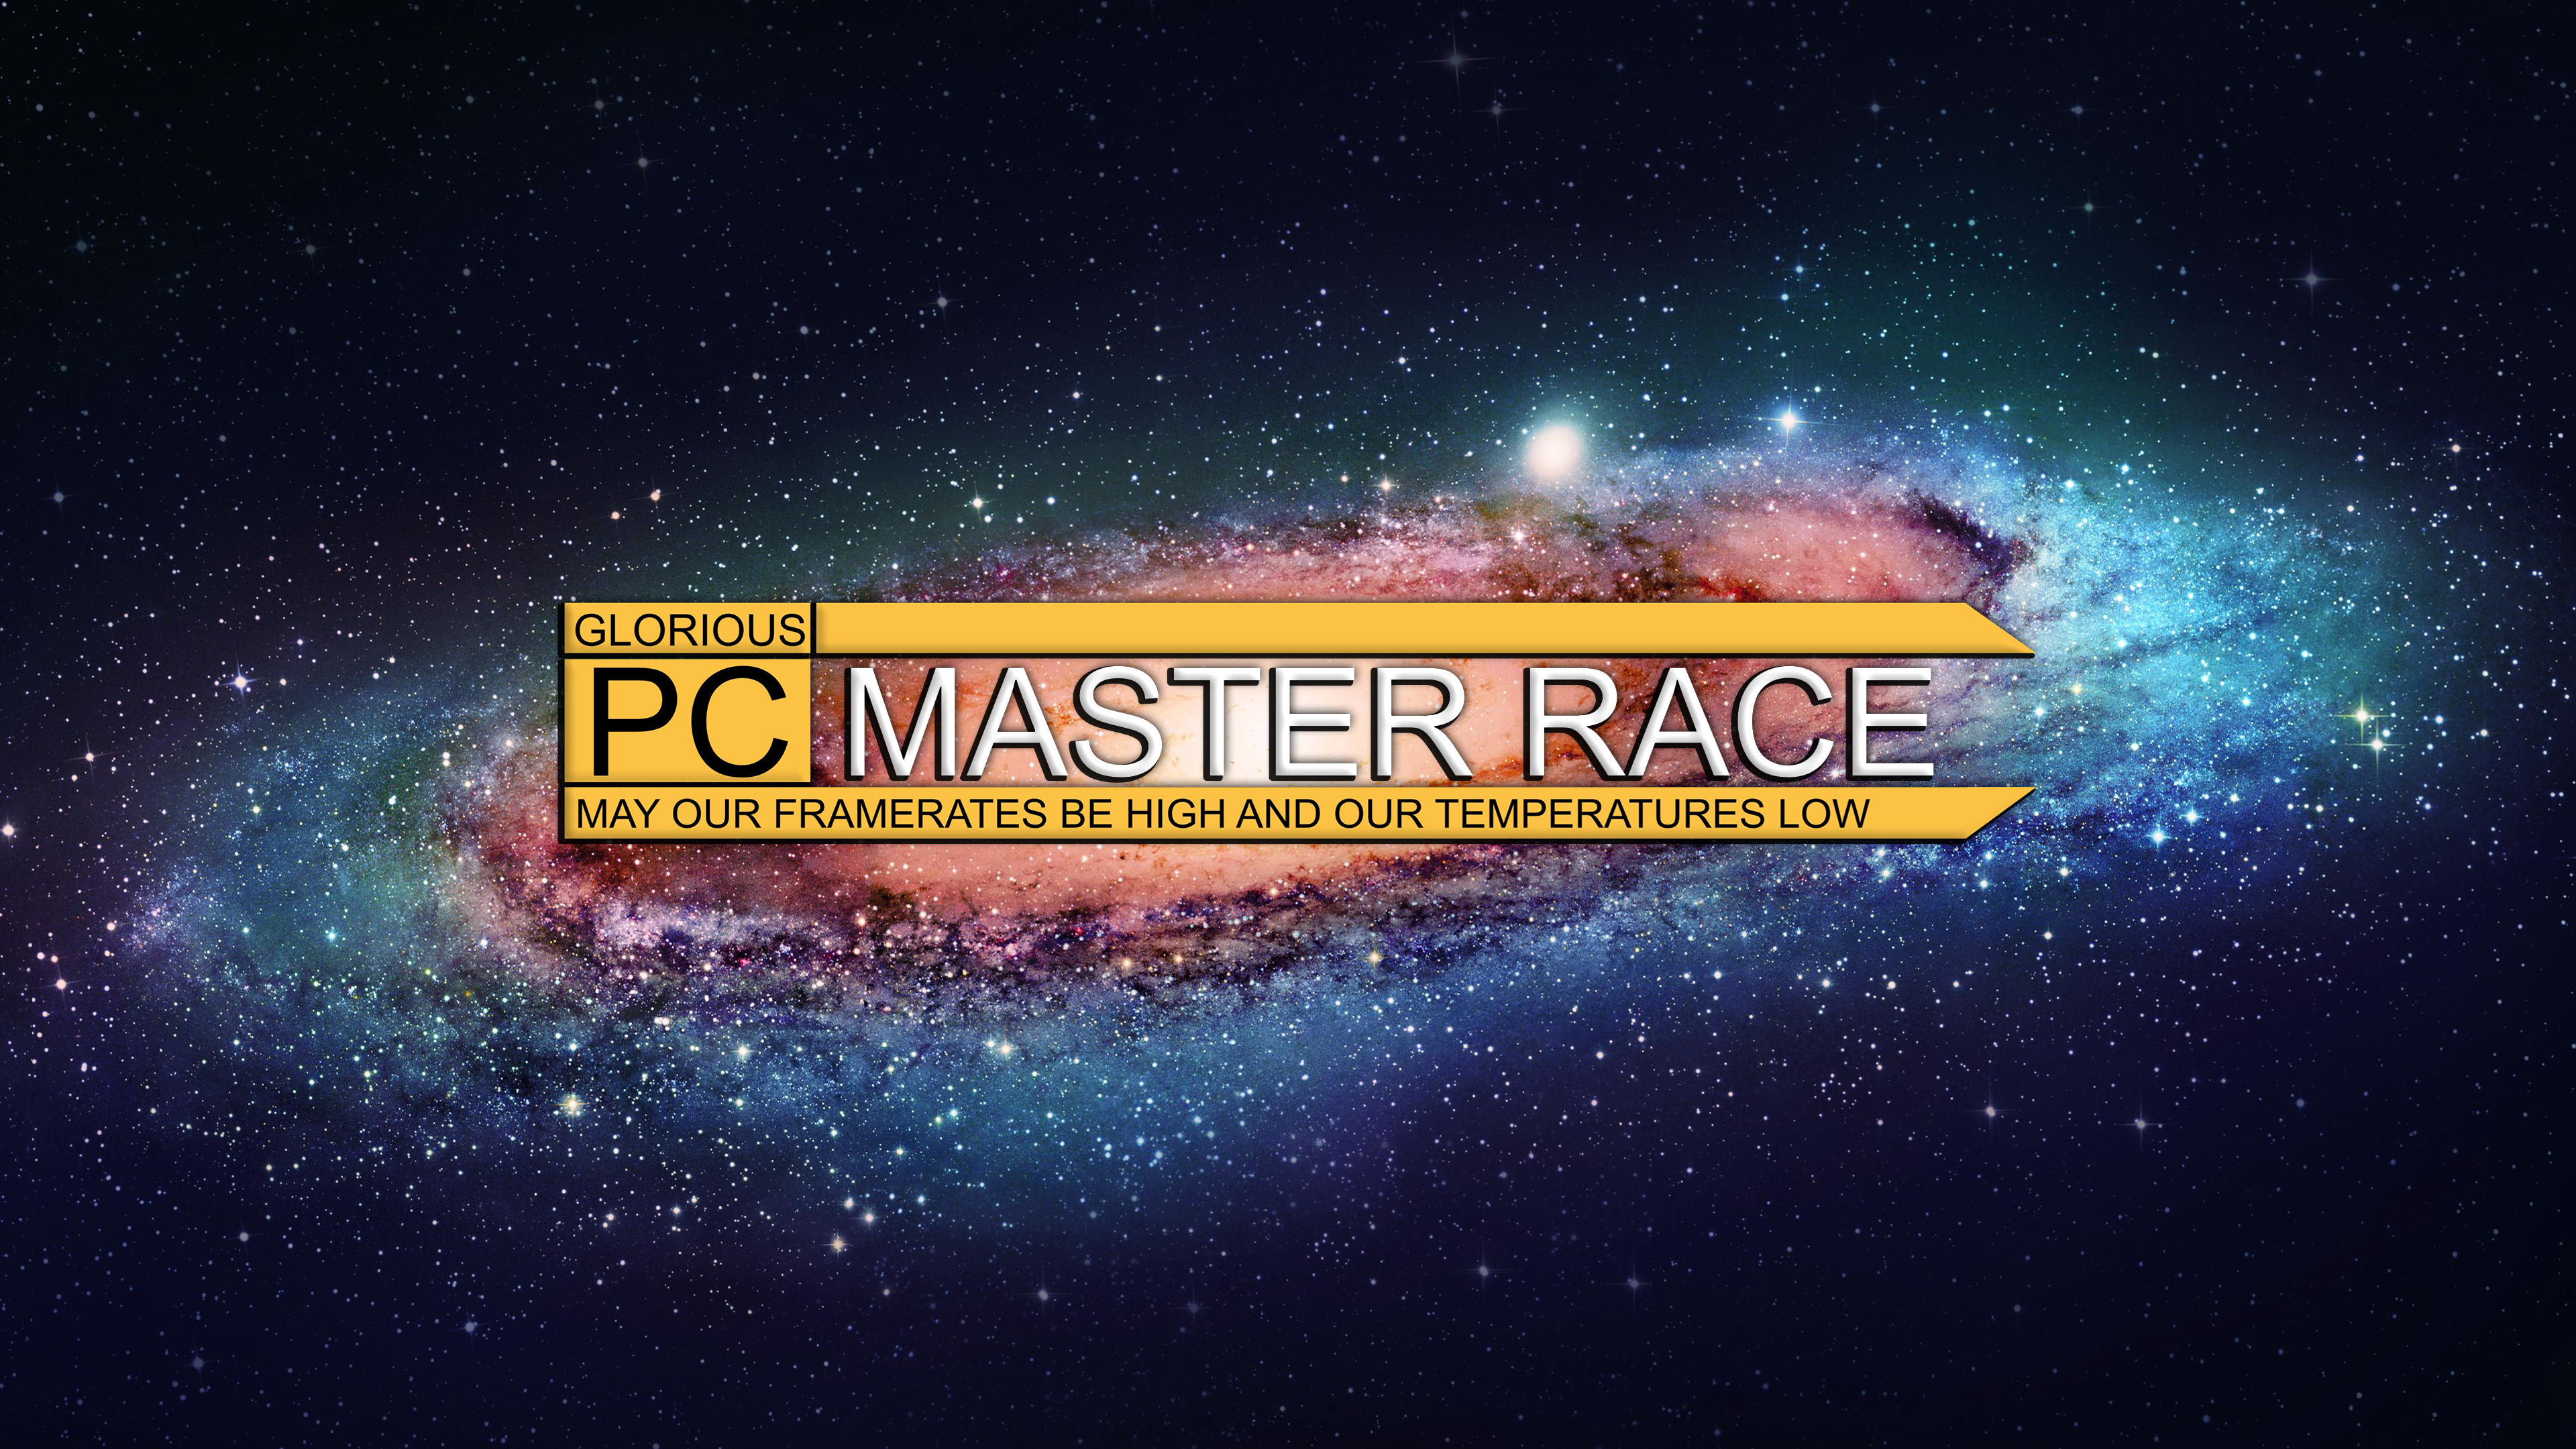 Pc Master Race 4k Wallpaper Pcmasterra - Youtube Cover Photo Galaxy - HD Wallpaper 